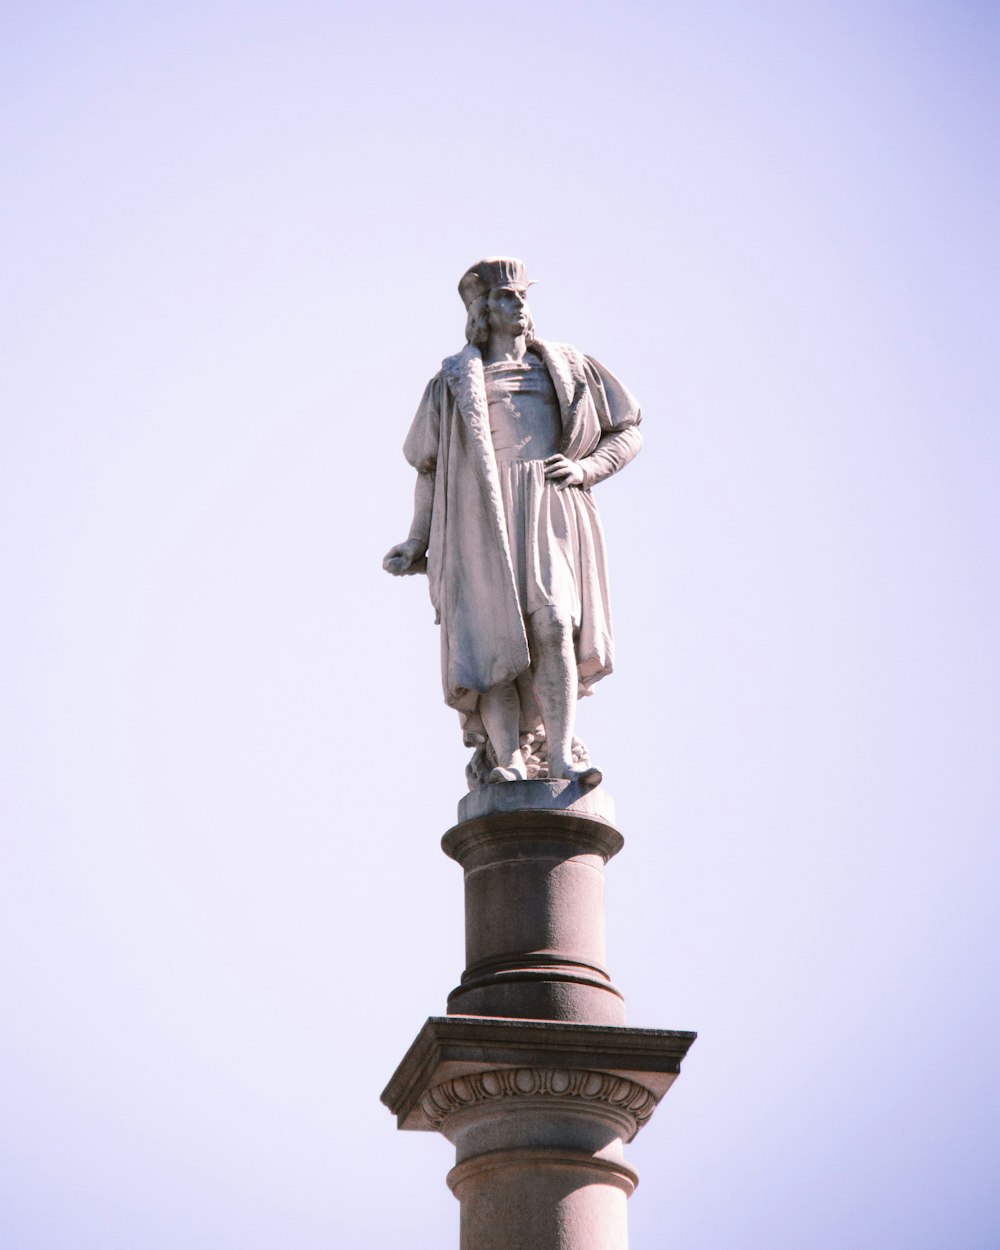 a statue of a man standing on top of a pillar